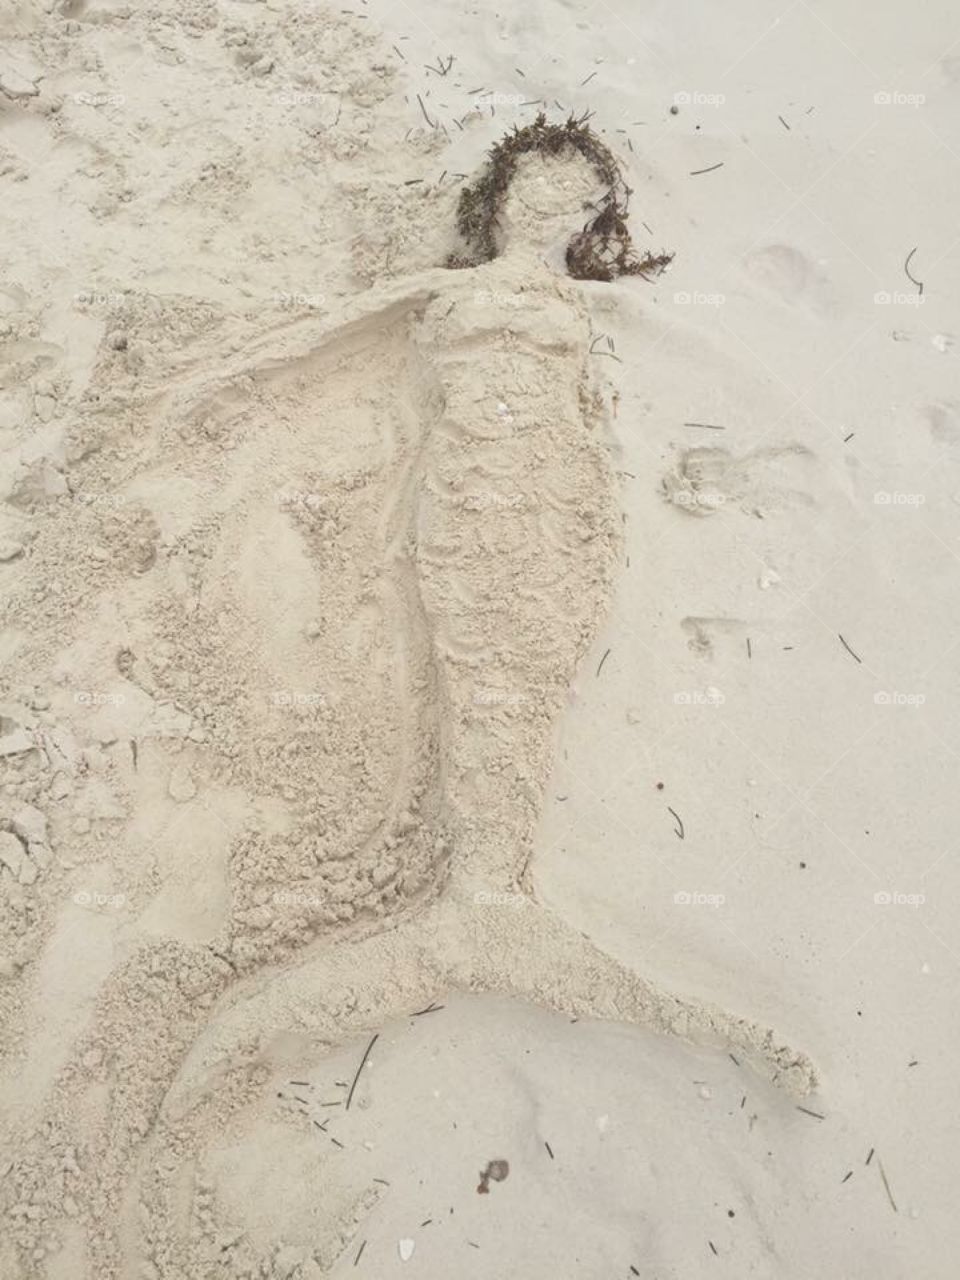 Mermaid in the sand 